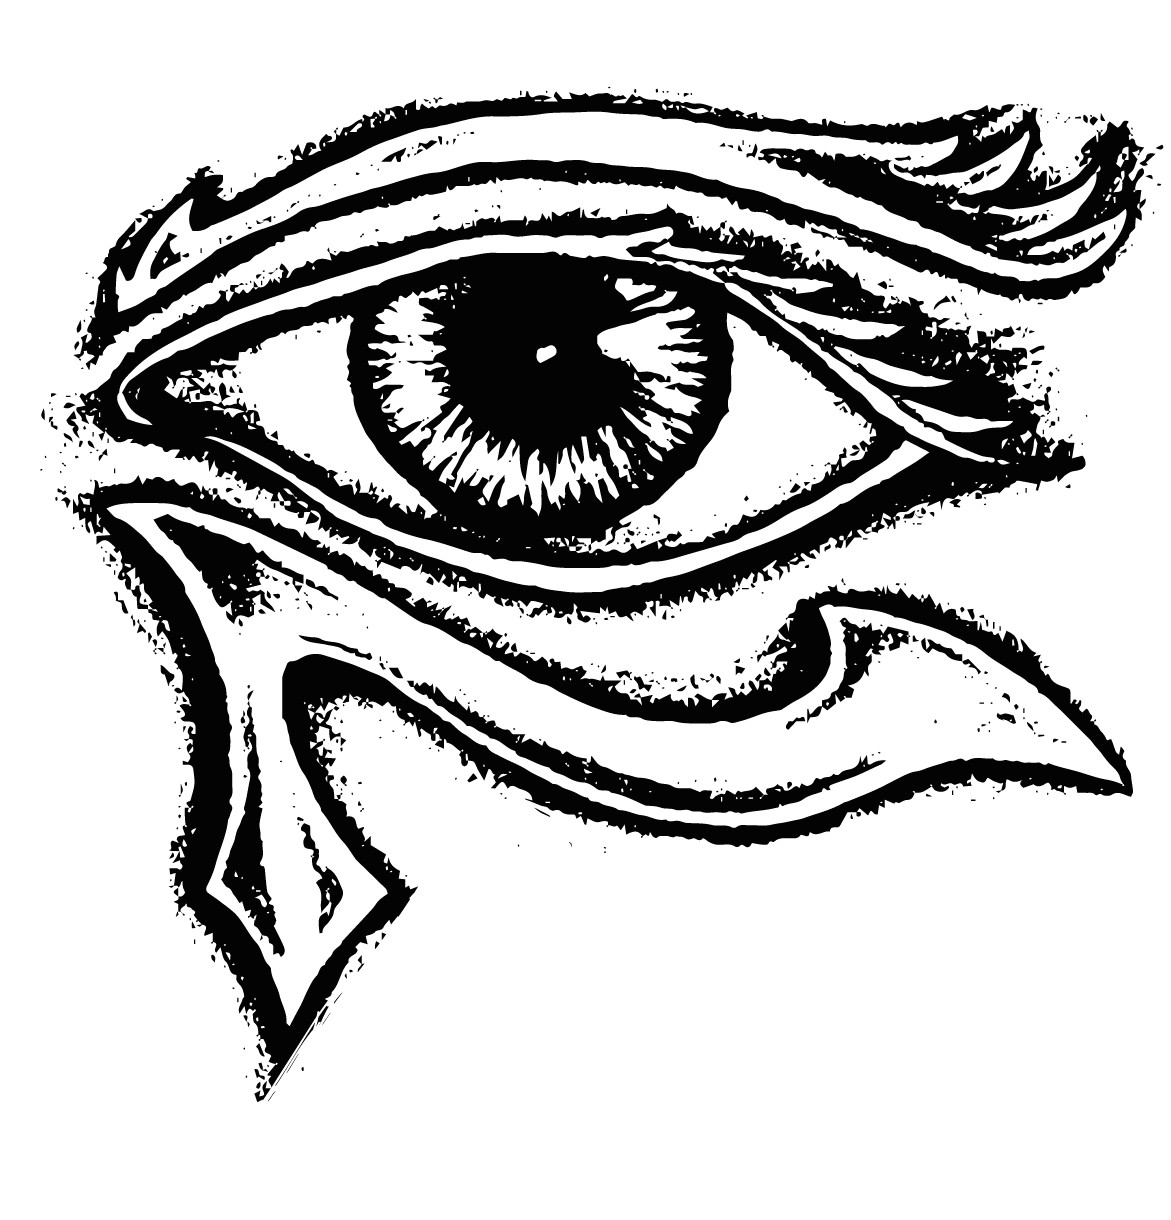 Drawing Eye Of Horus the Eye Of Horus the Egyptian Eye and Its Meaning Mythologian Net